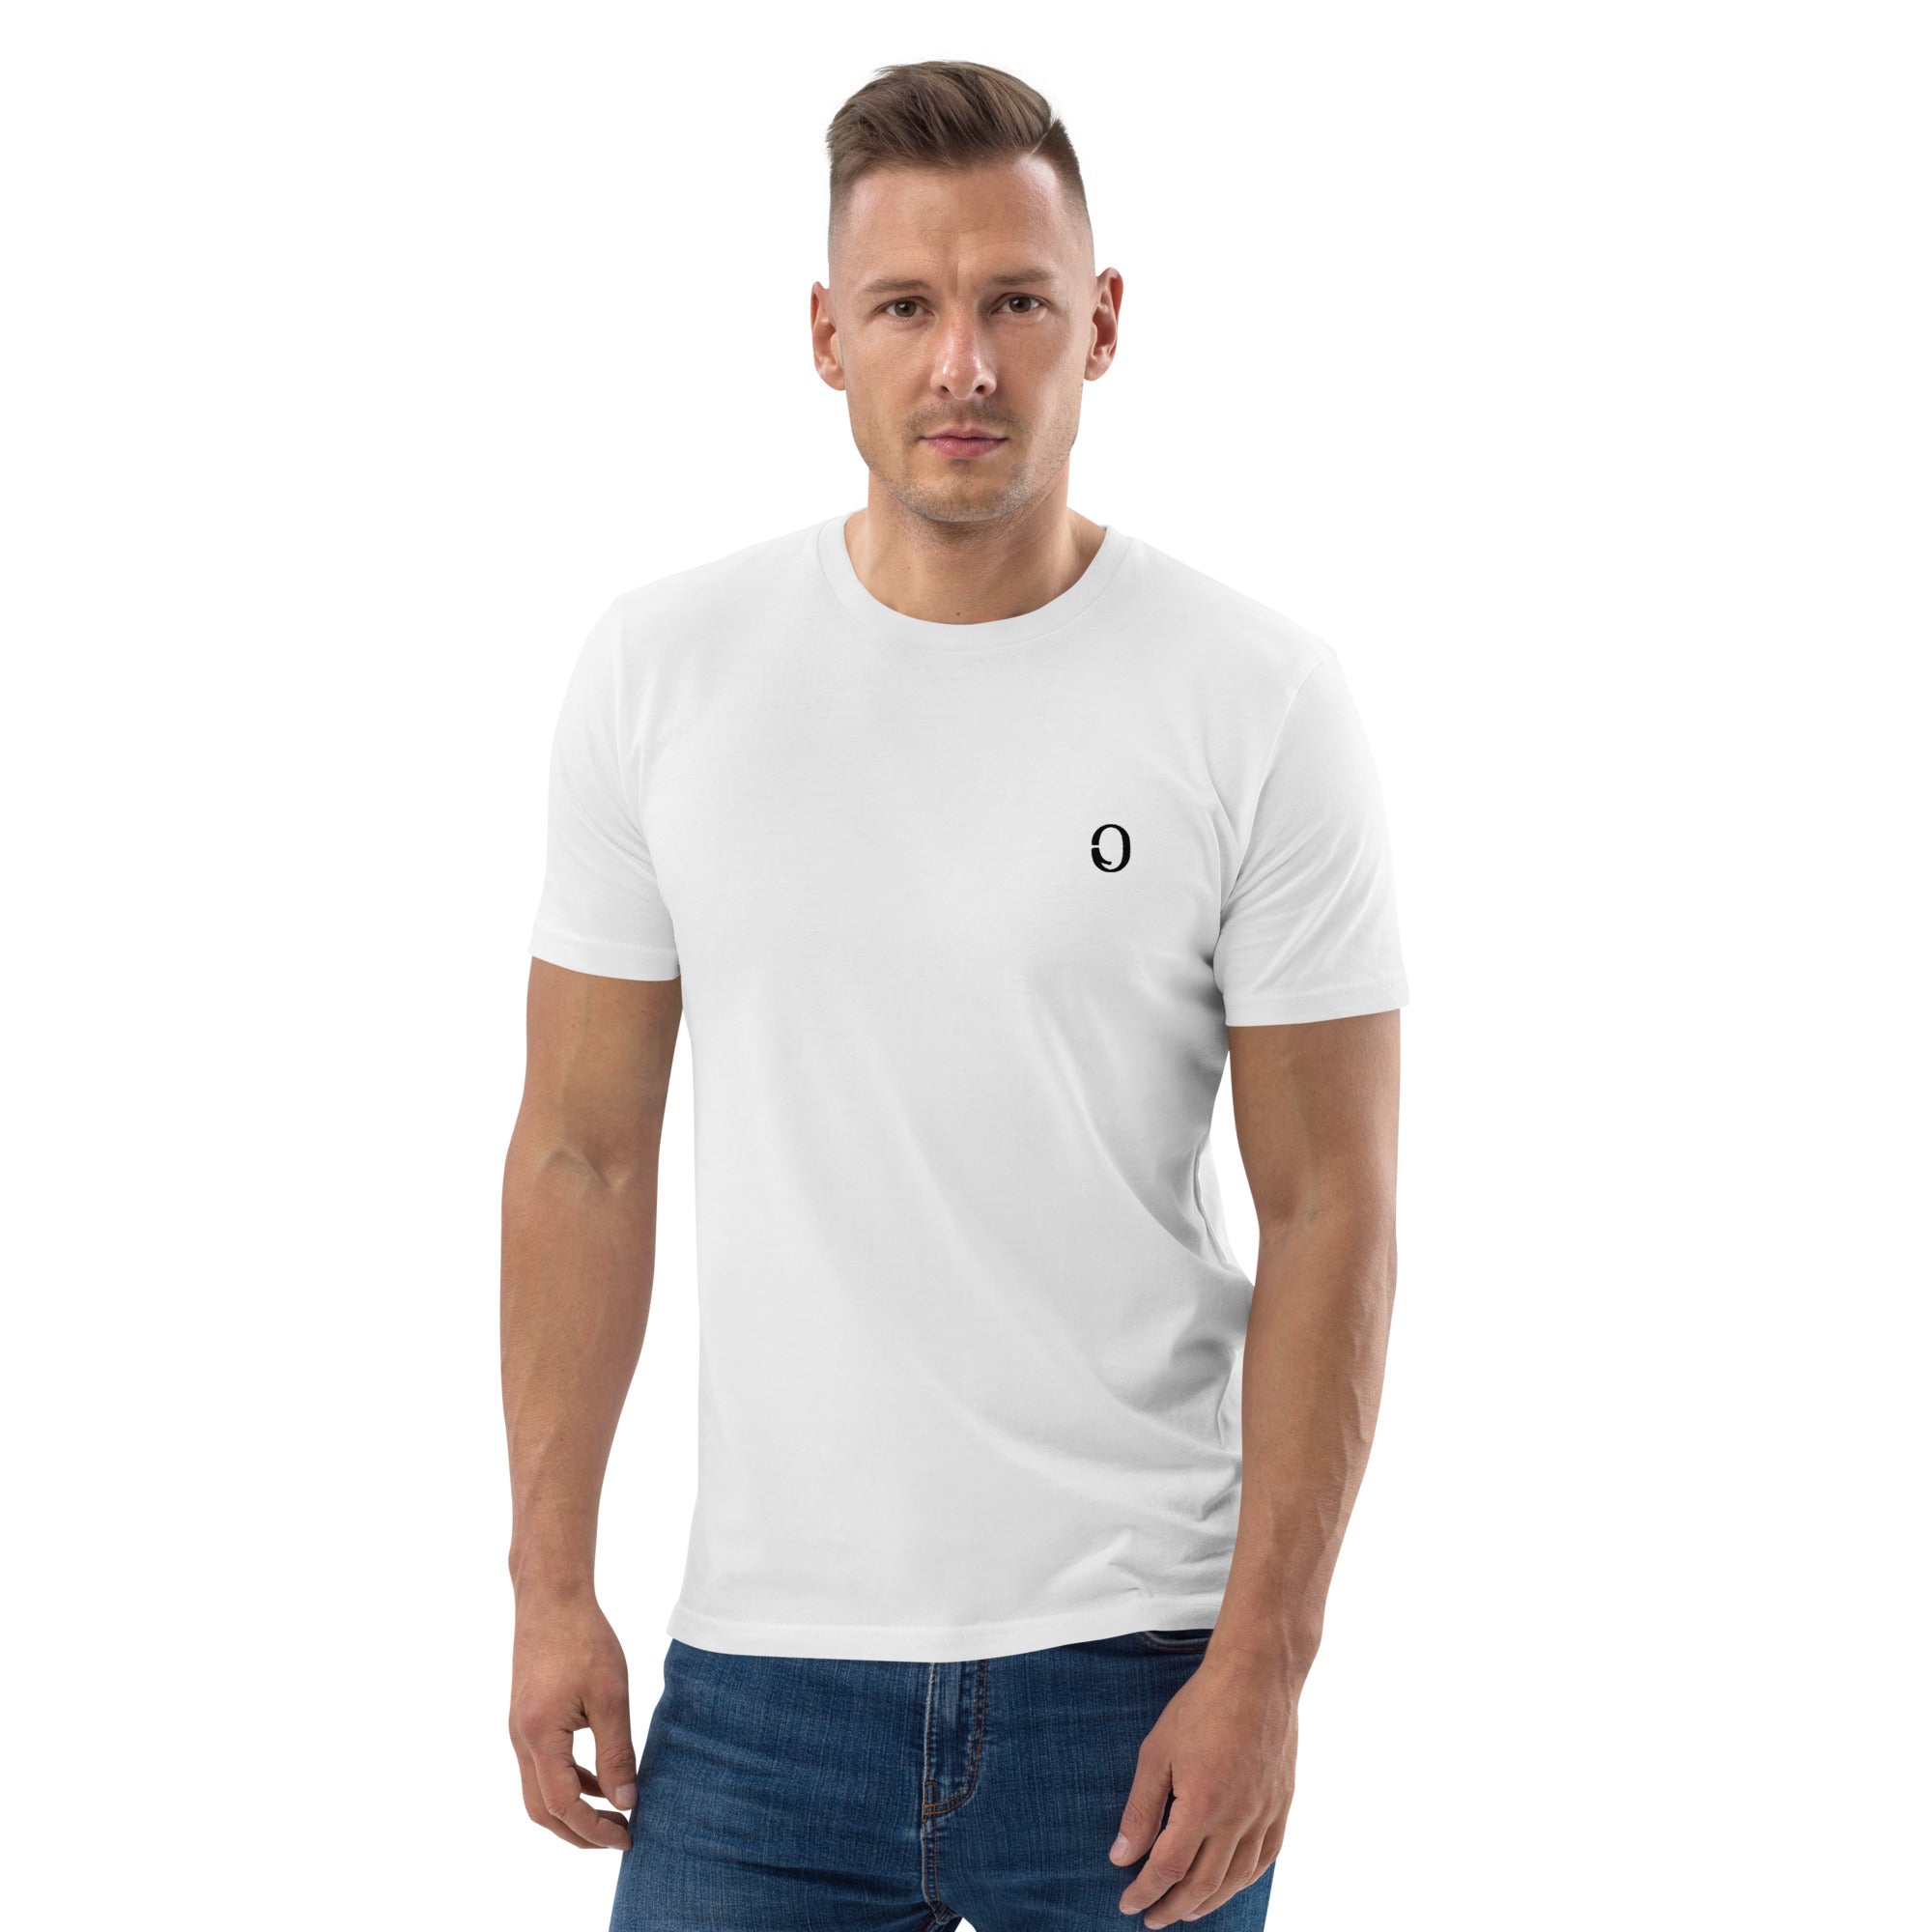 Symbol - T-shirt - Oddhook